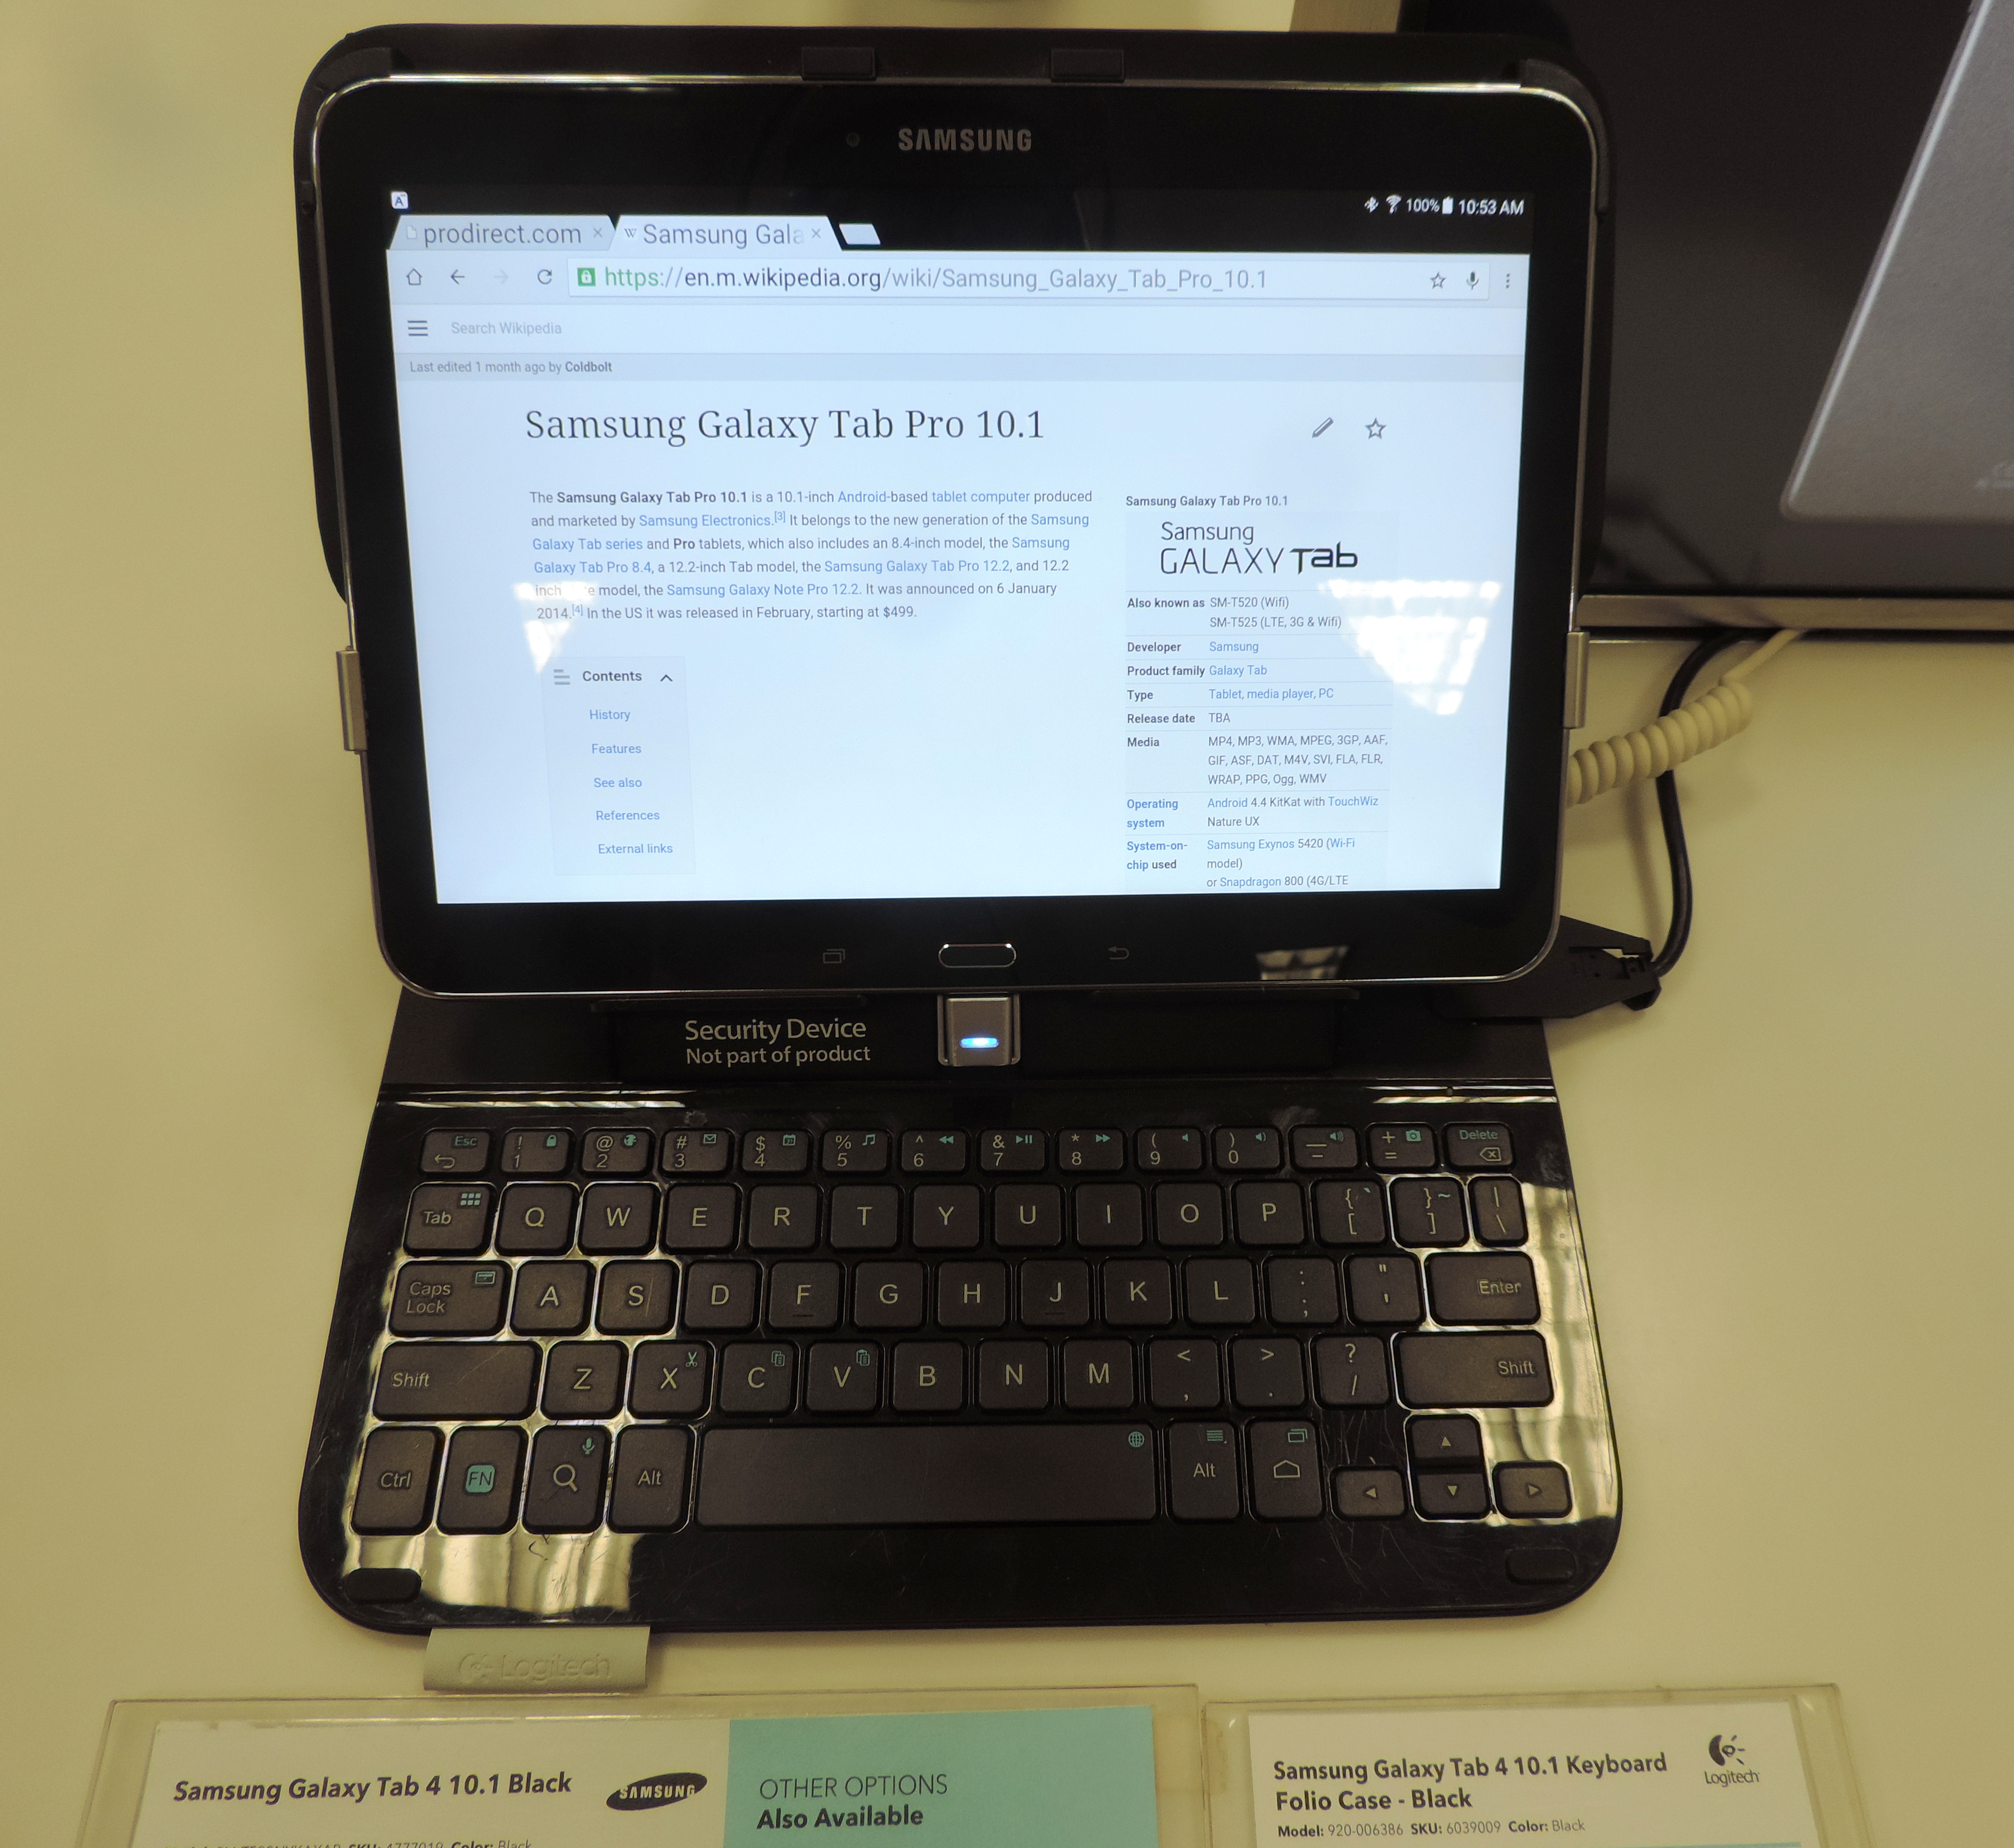 Samsung Galaxy Tab 2 10.1 - Wikipedia